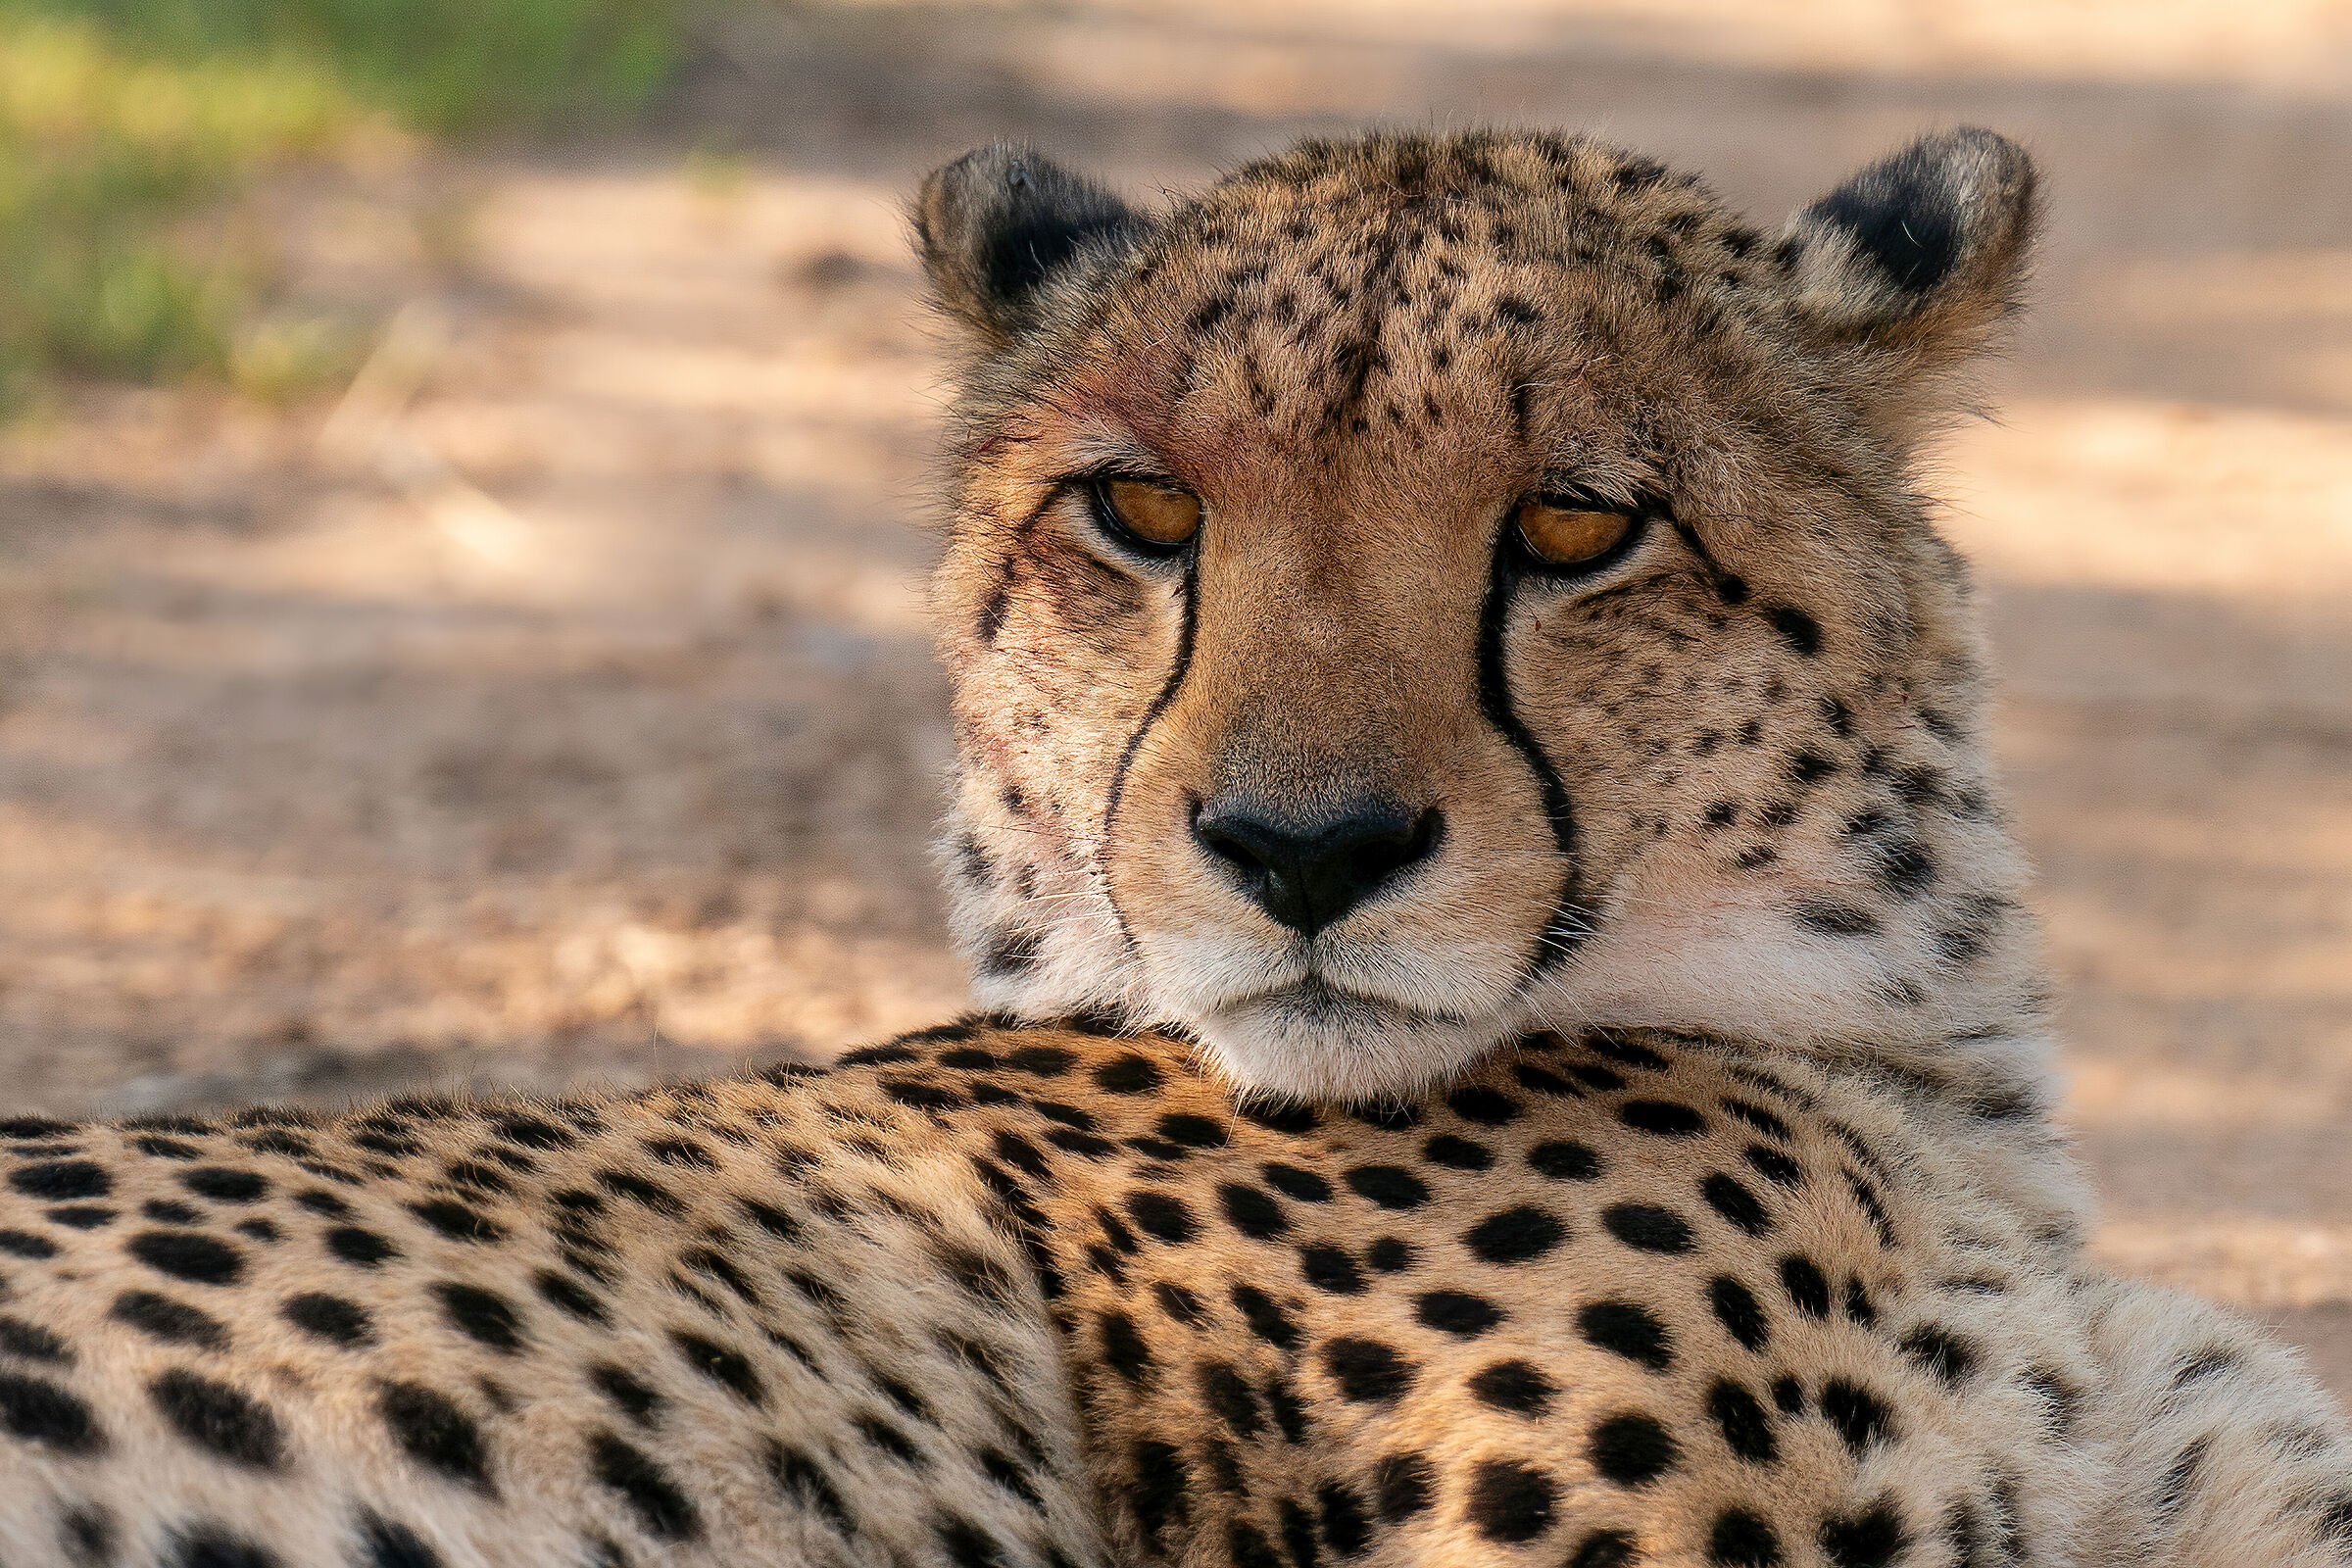 Cheetah at rest...